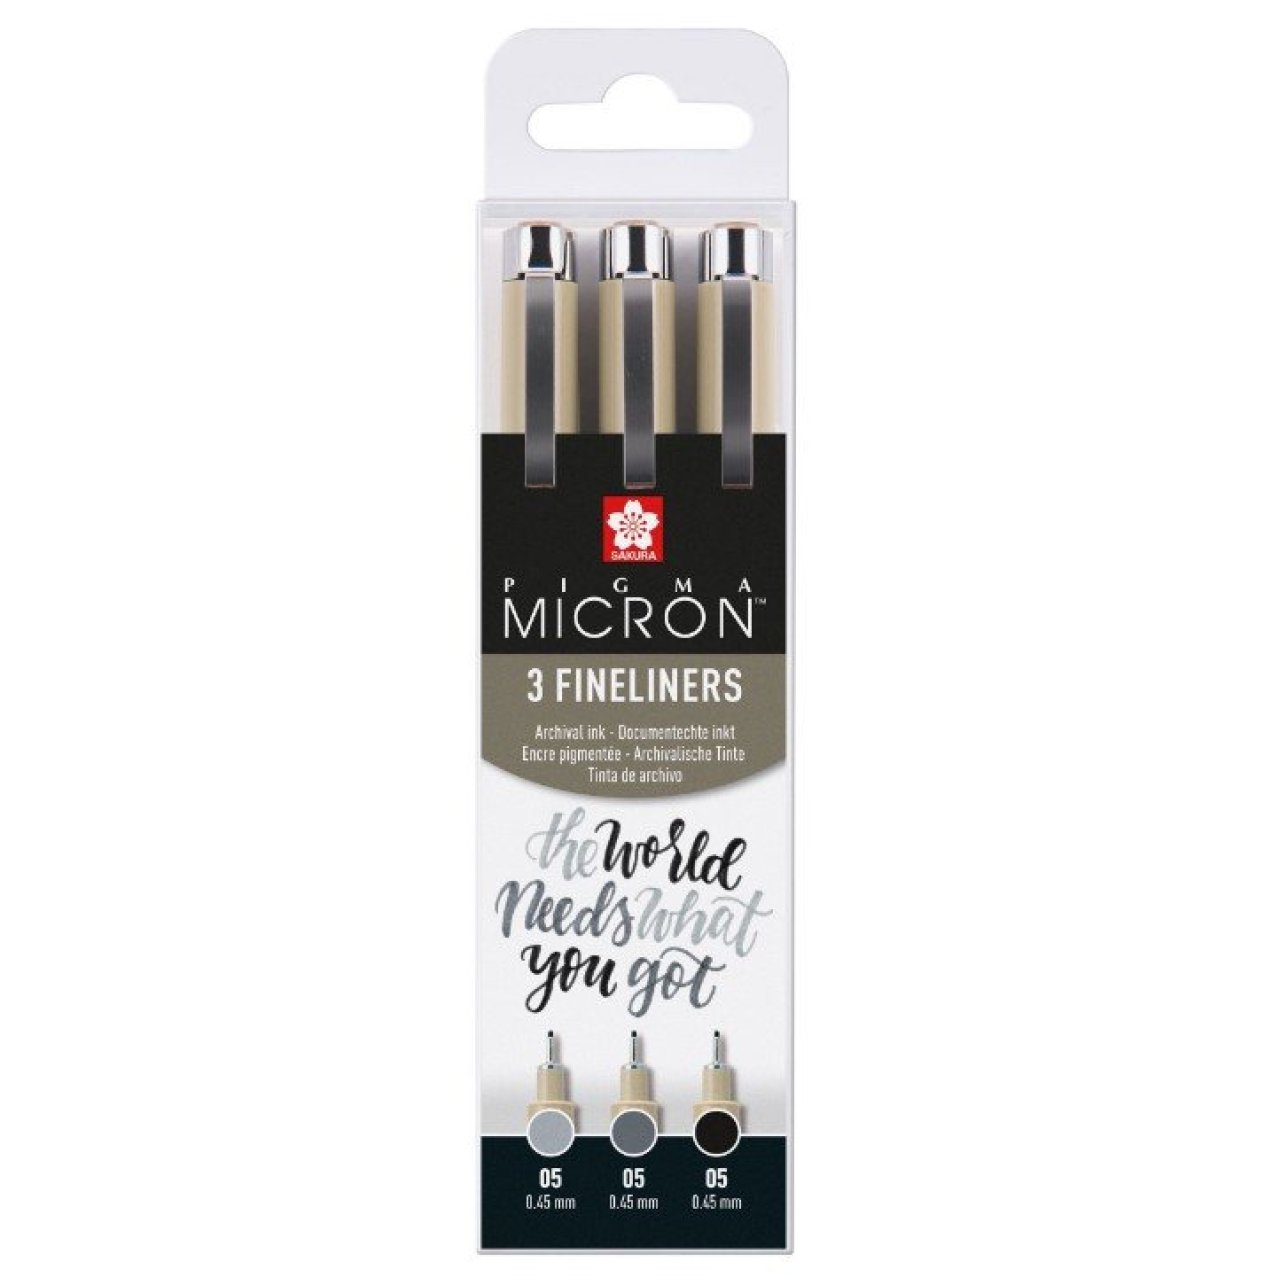 Sakura Micron 05 fineliner set | 3 pennen, zwart grijs - Verfze